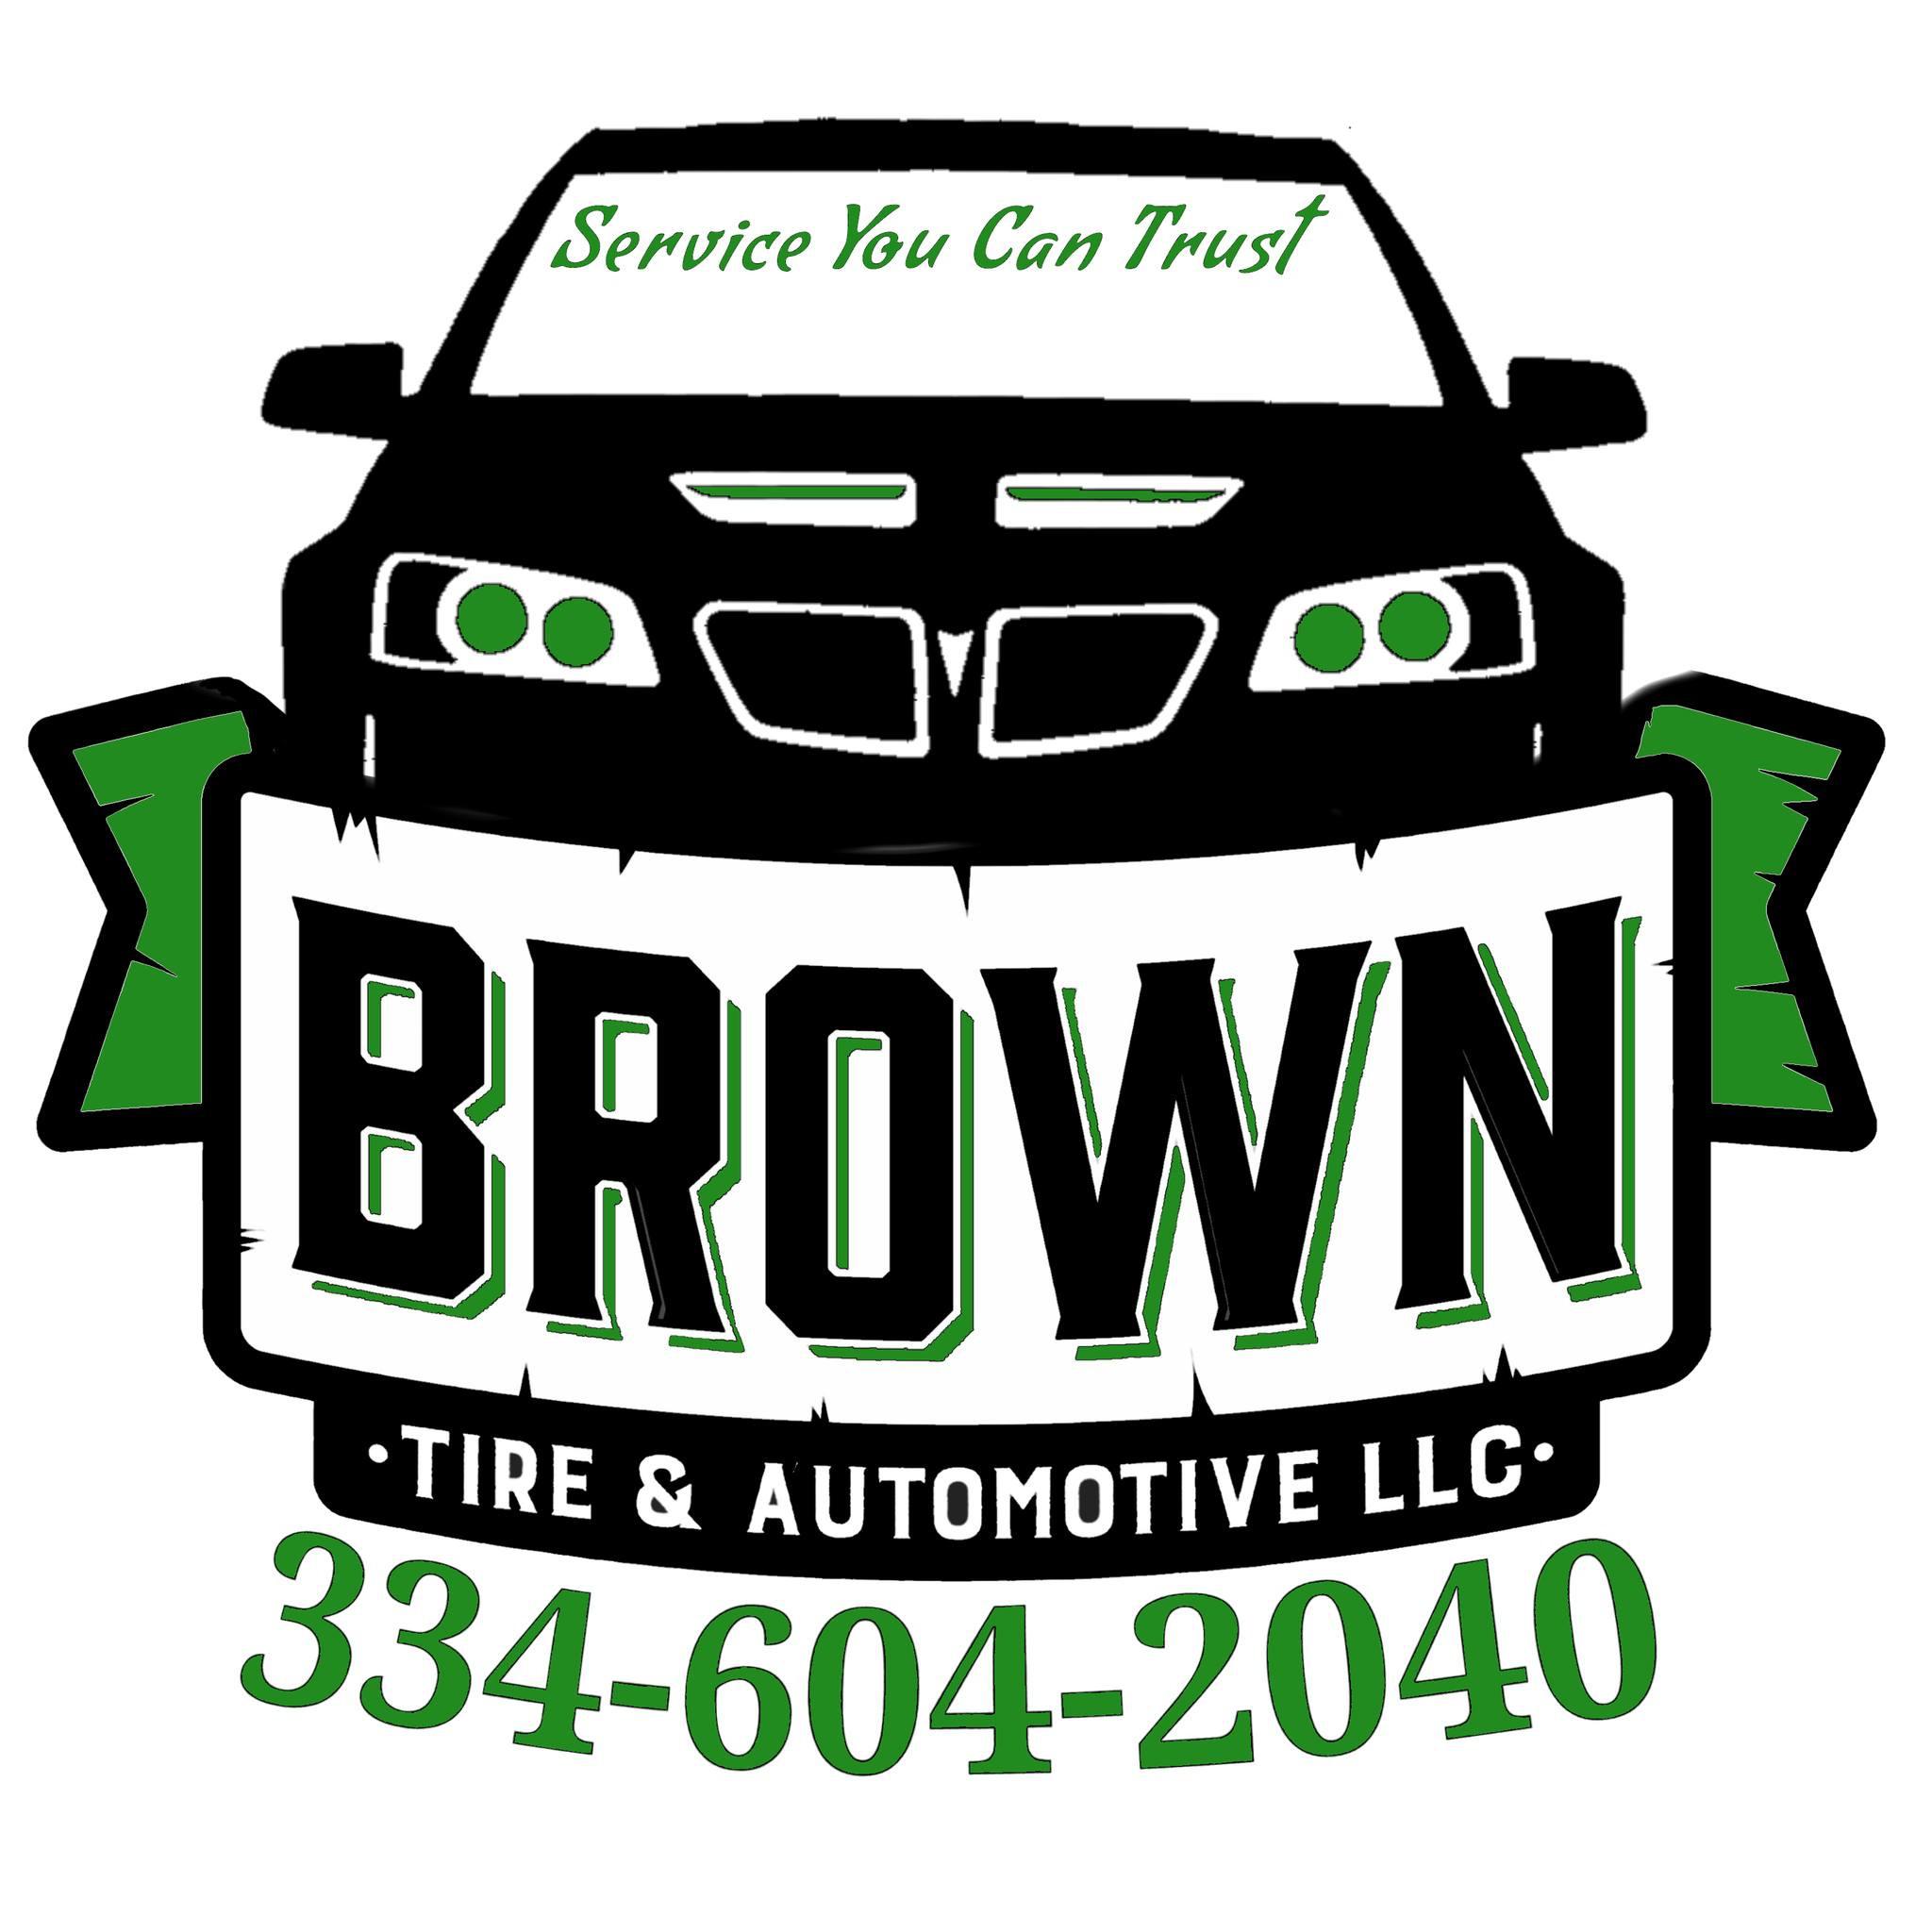 Brown Tire & Automotive LLC - Montgomery, AL 36117 - (334)604-2040 | ShowMeLocal.com